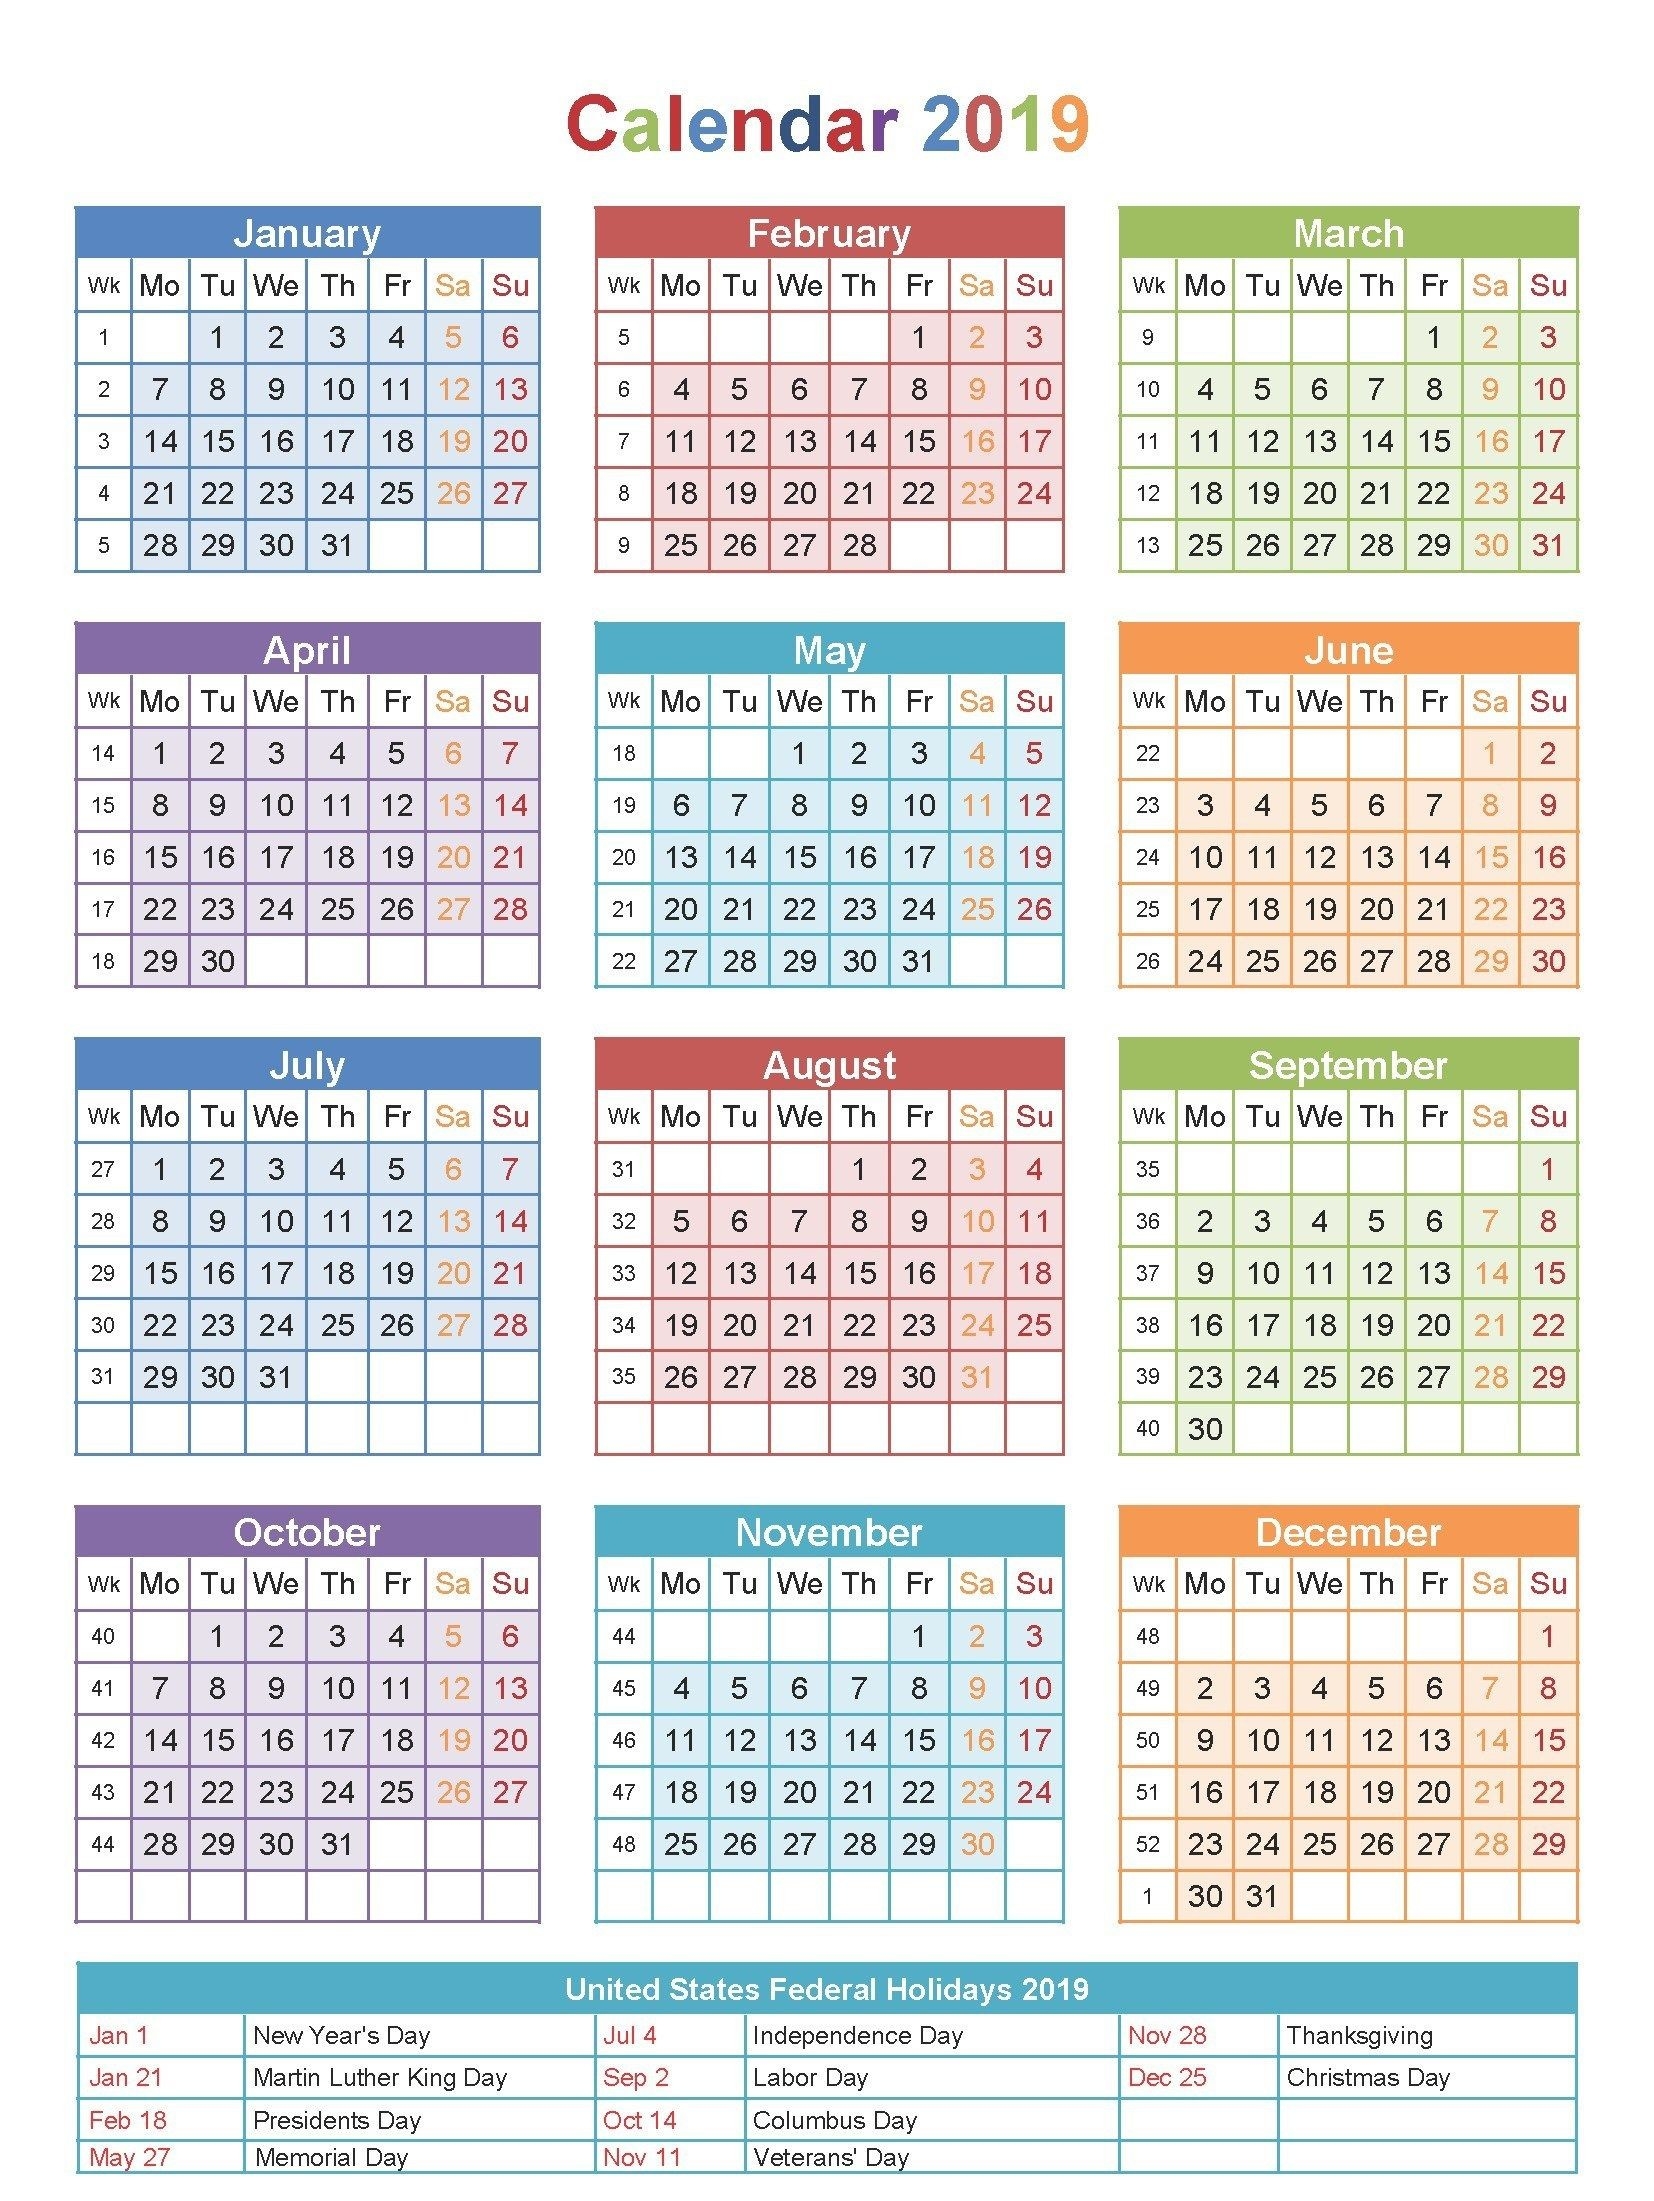 Free Editable Usa 2019 Calendar Pdf, Excel, Word Templates-2020 Calendar With Public Holidays And School Holidays South Africa